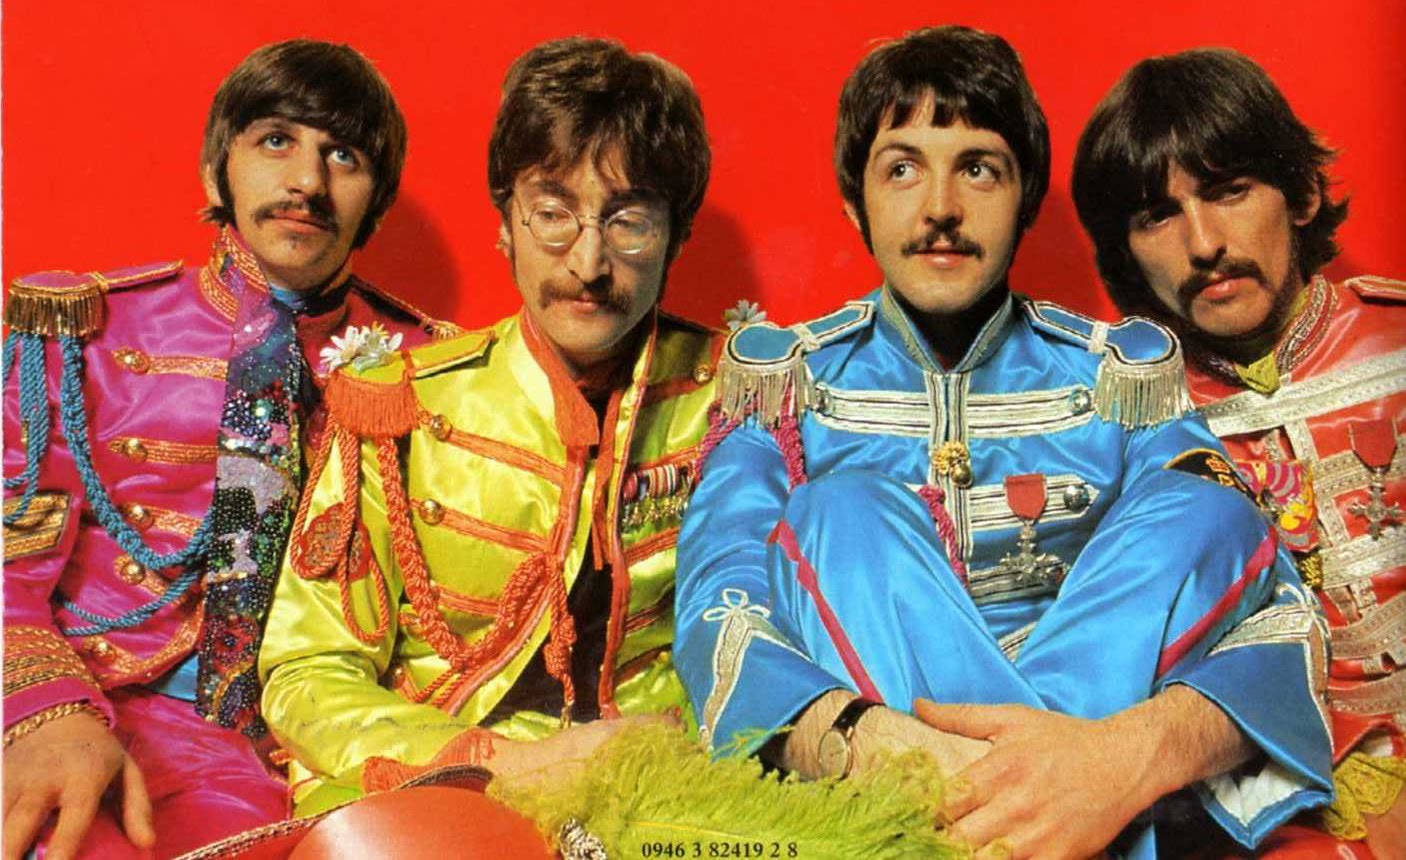 10 curiosidades sobre 'Sgt. Pepper's Lonely Hearts Club Band', dos Beatles  - GQ | Música